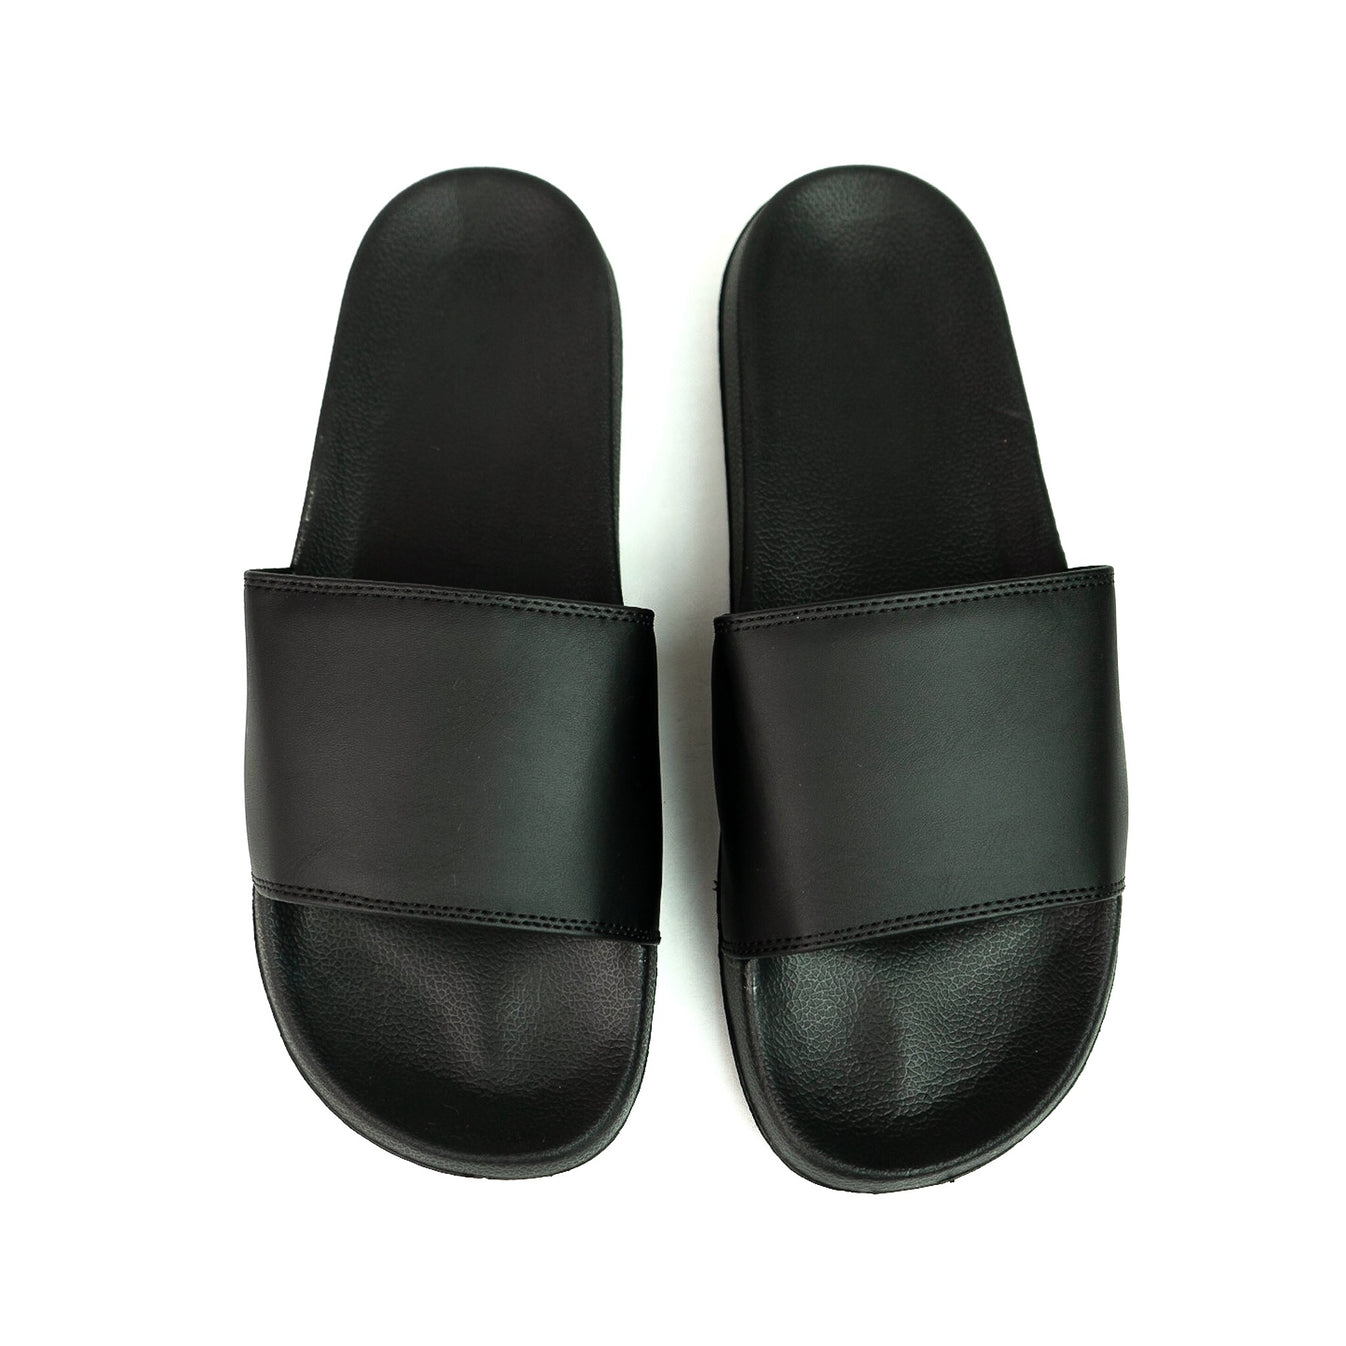 Minimalist Slides - Black - Cushioned Strap - EVA Sole - Eco-Friendly ...